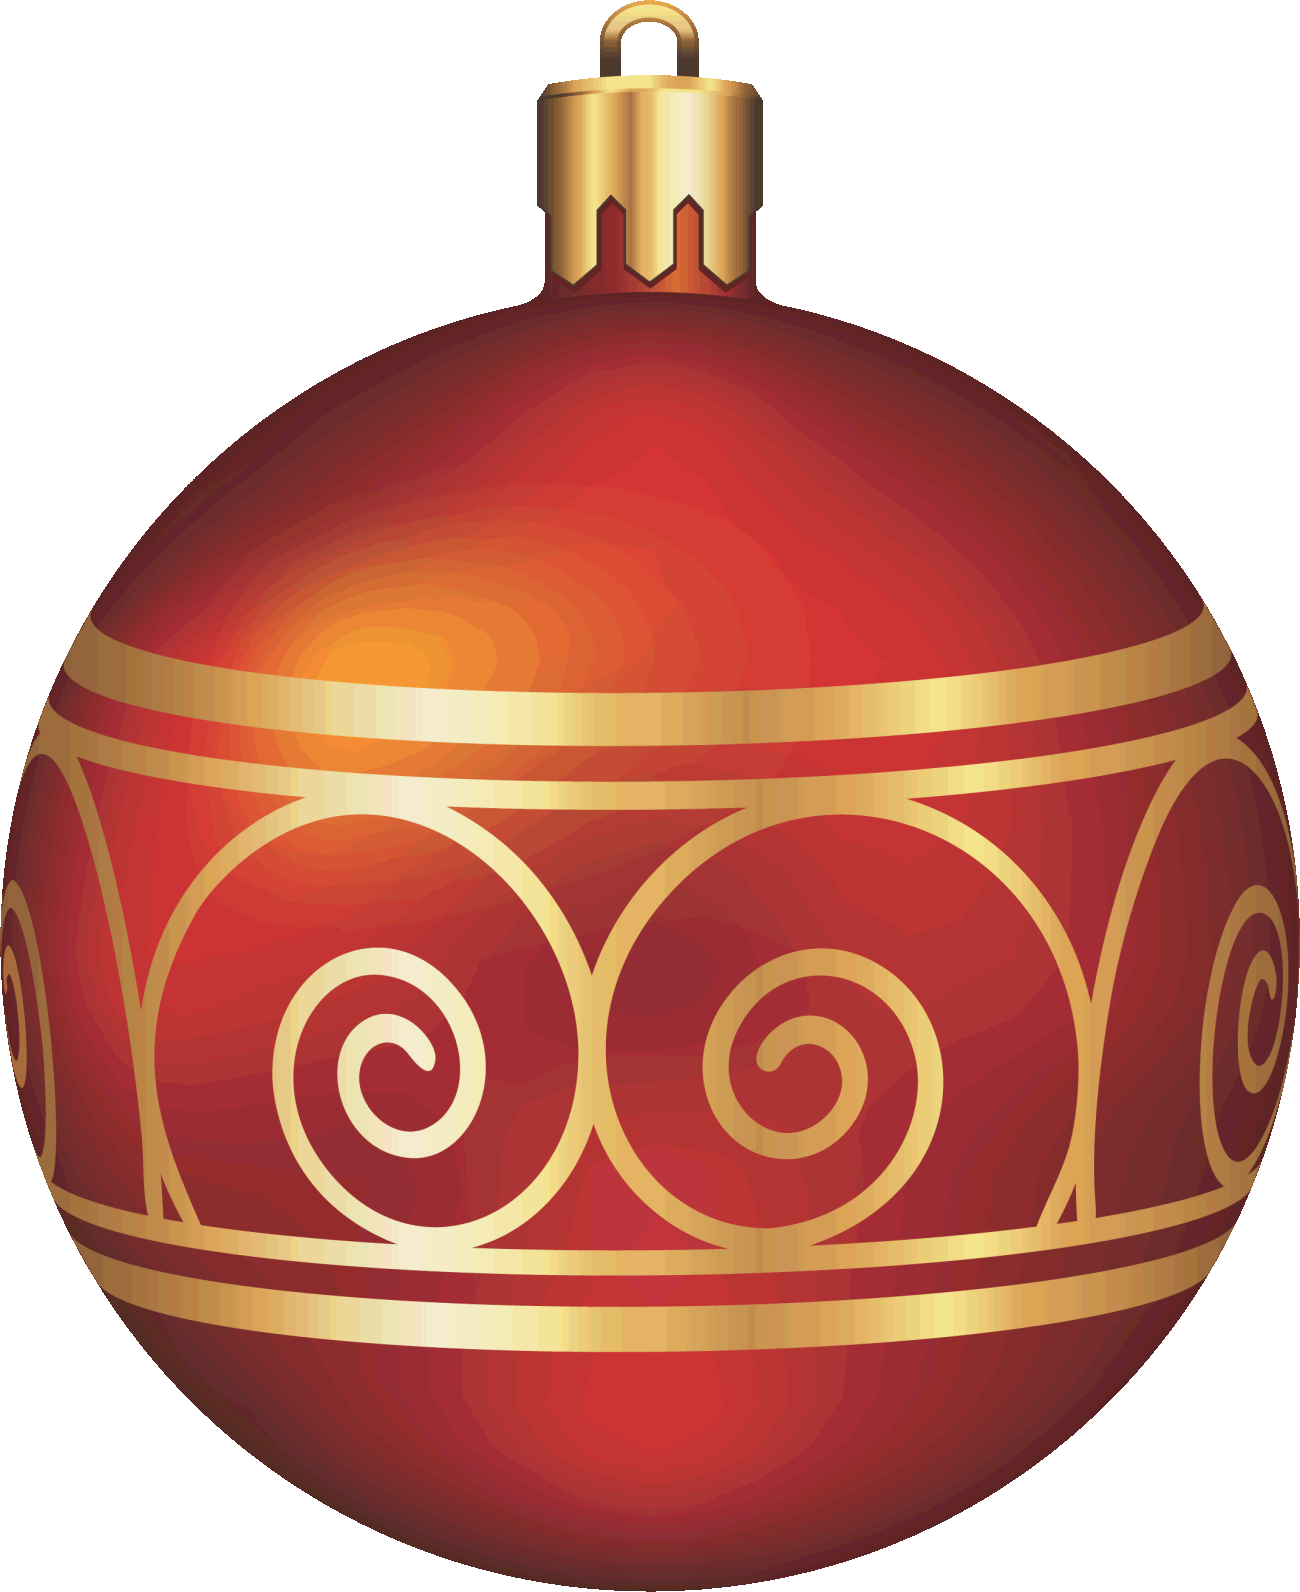 Holiday clipart balls. Pin by brandy gleim